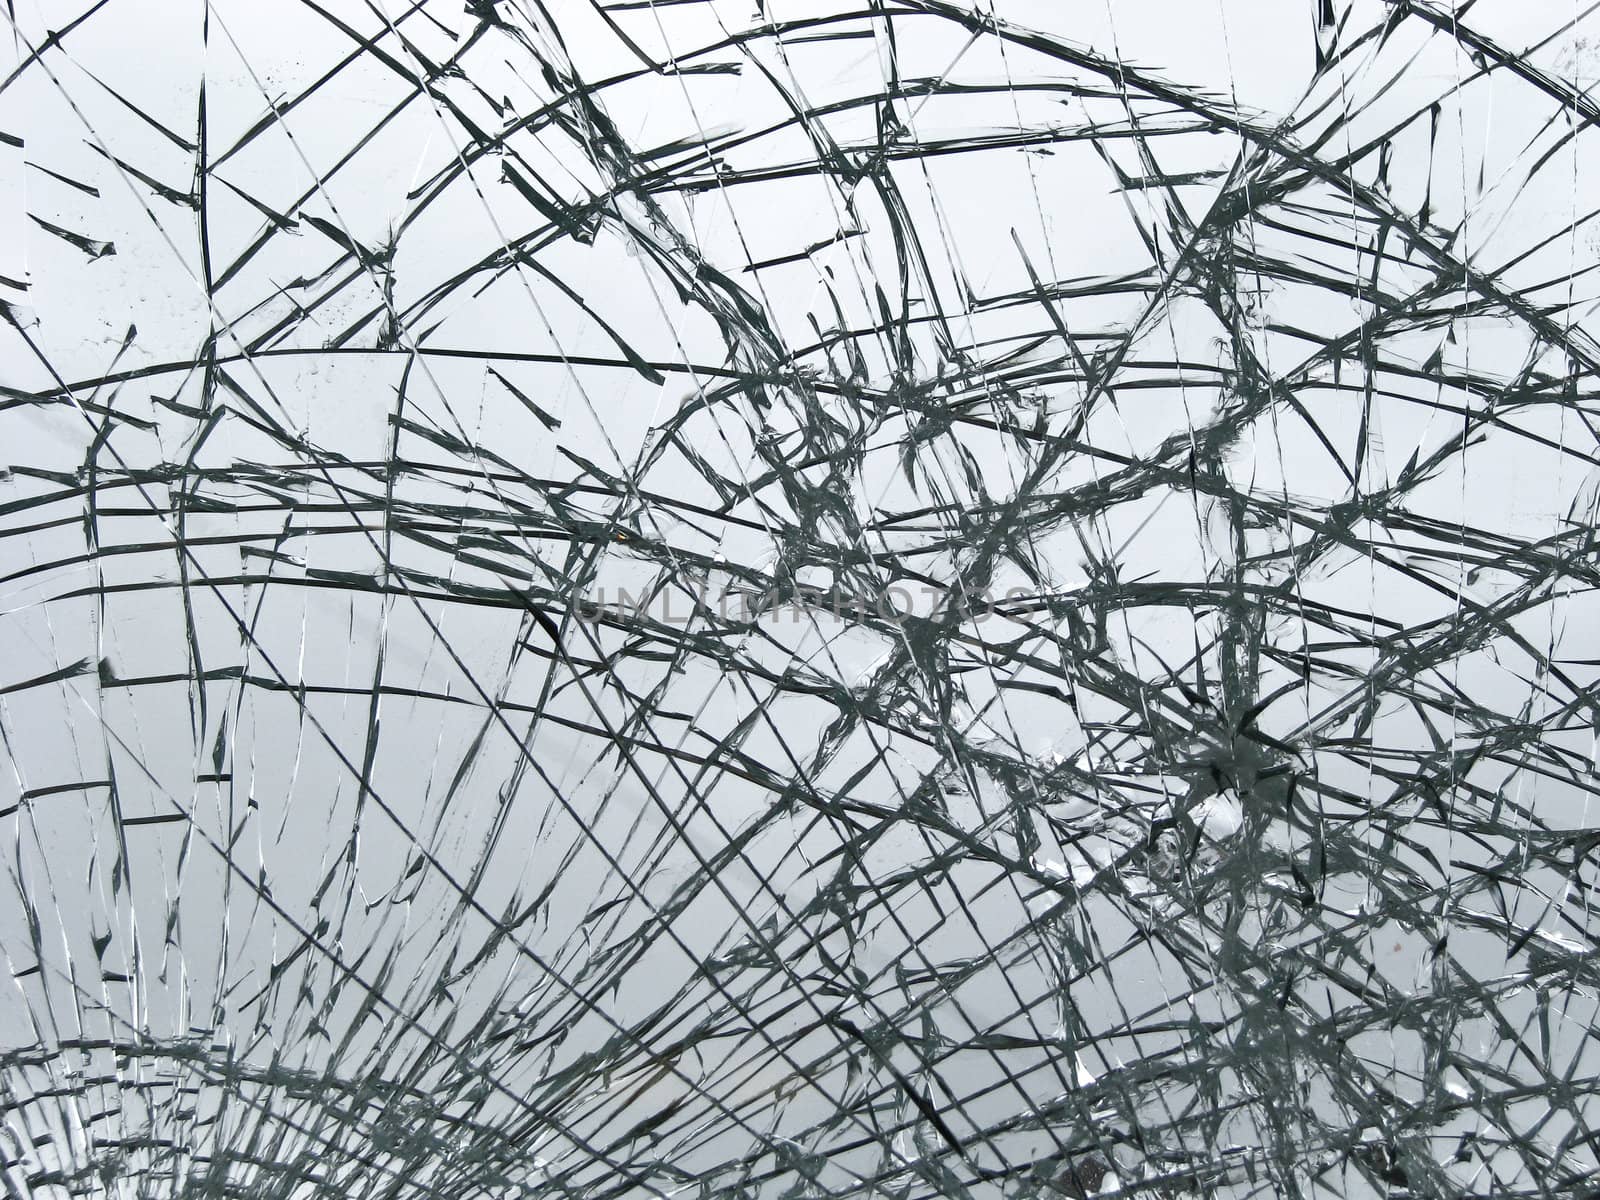 smashed window glass close-up
